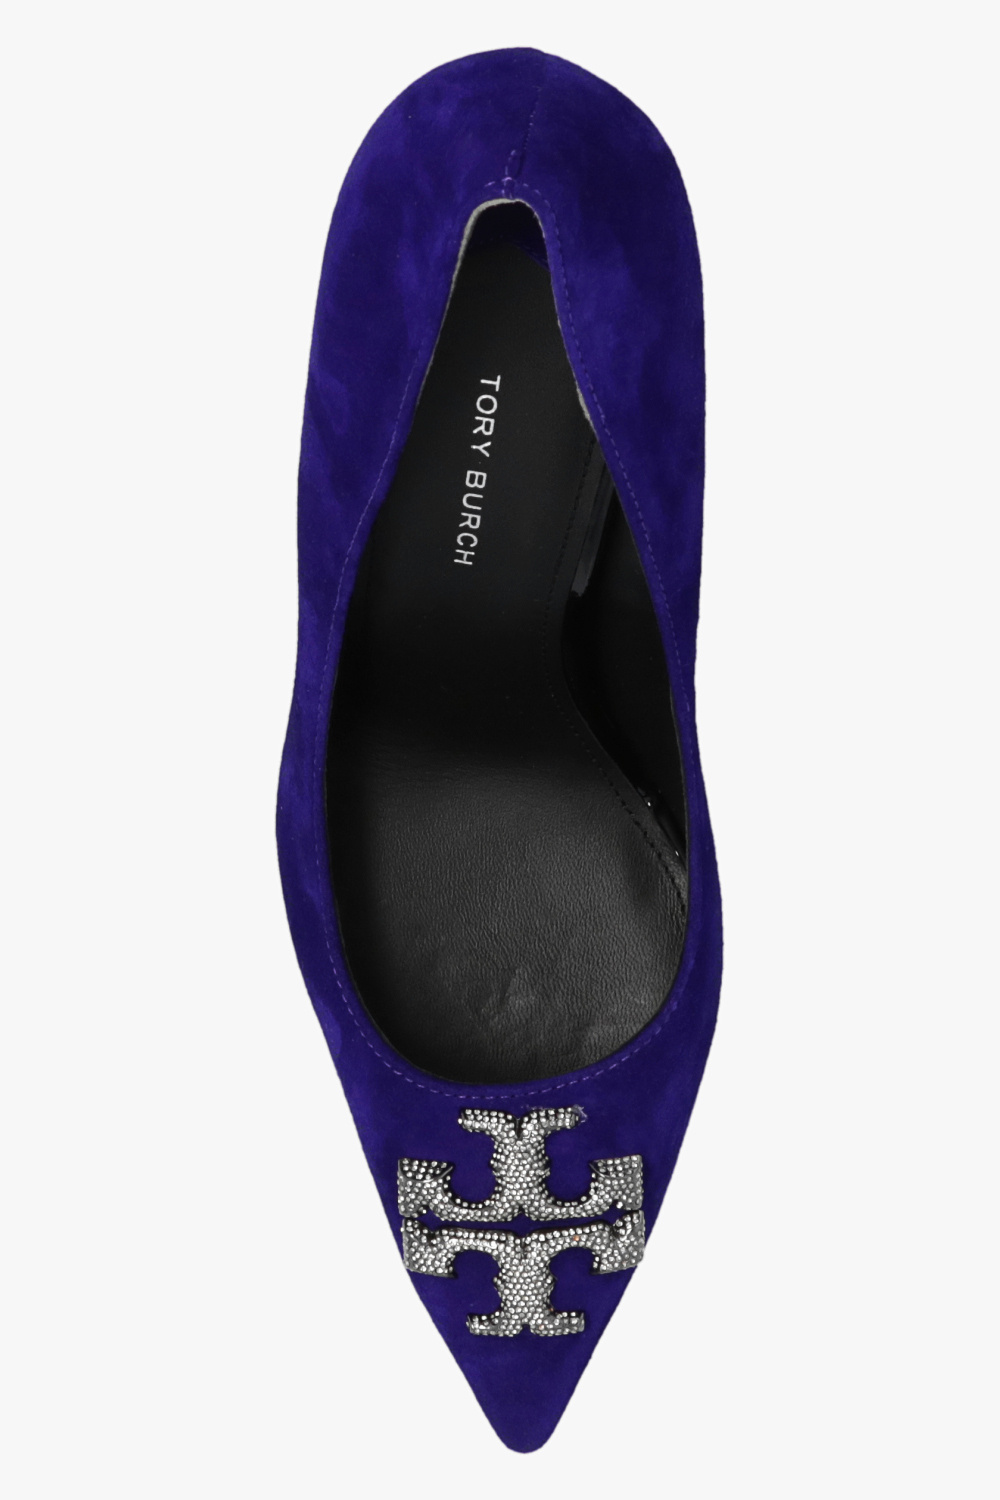 Tory Burch ELEANOR PAVÉ PUMP Shoes/ Heel/Suede/Black/ US 8M/$428